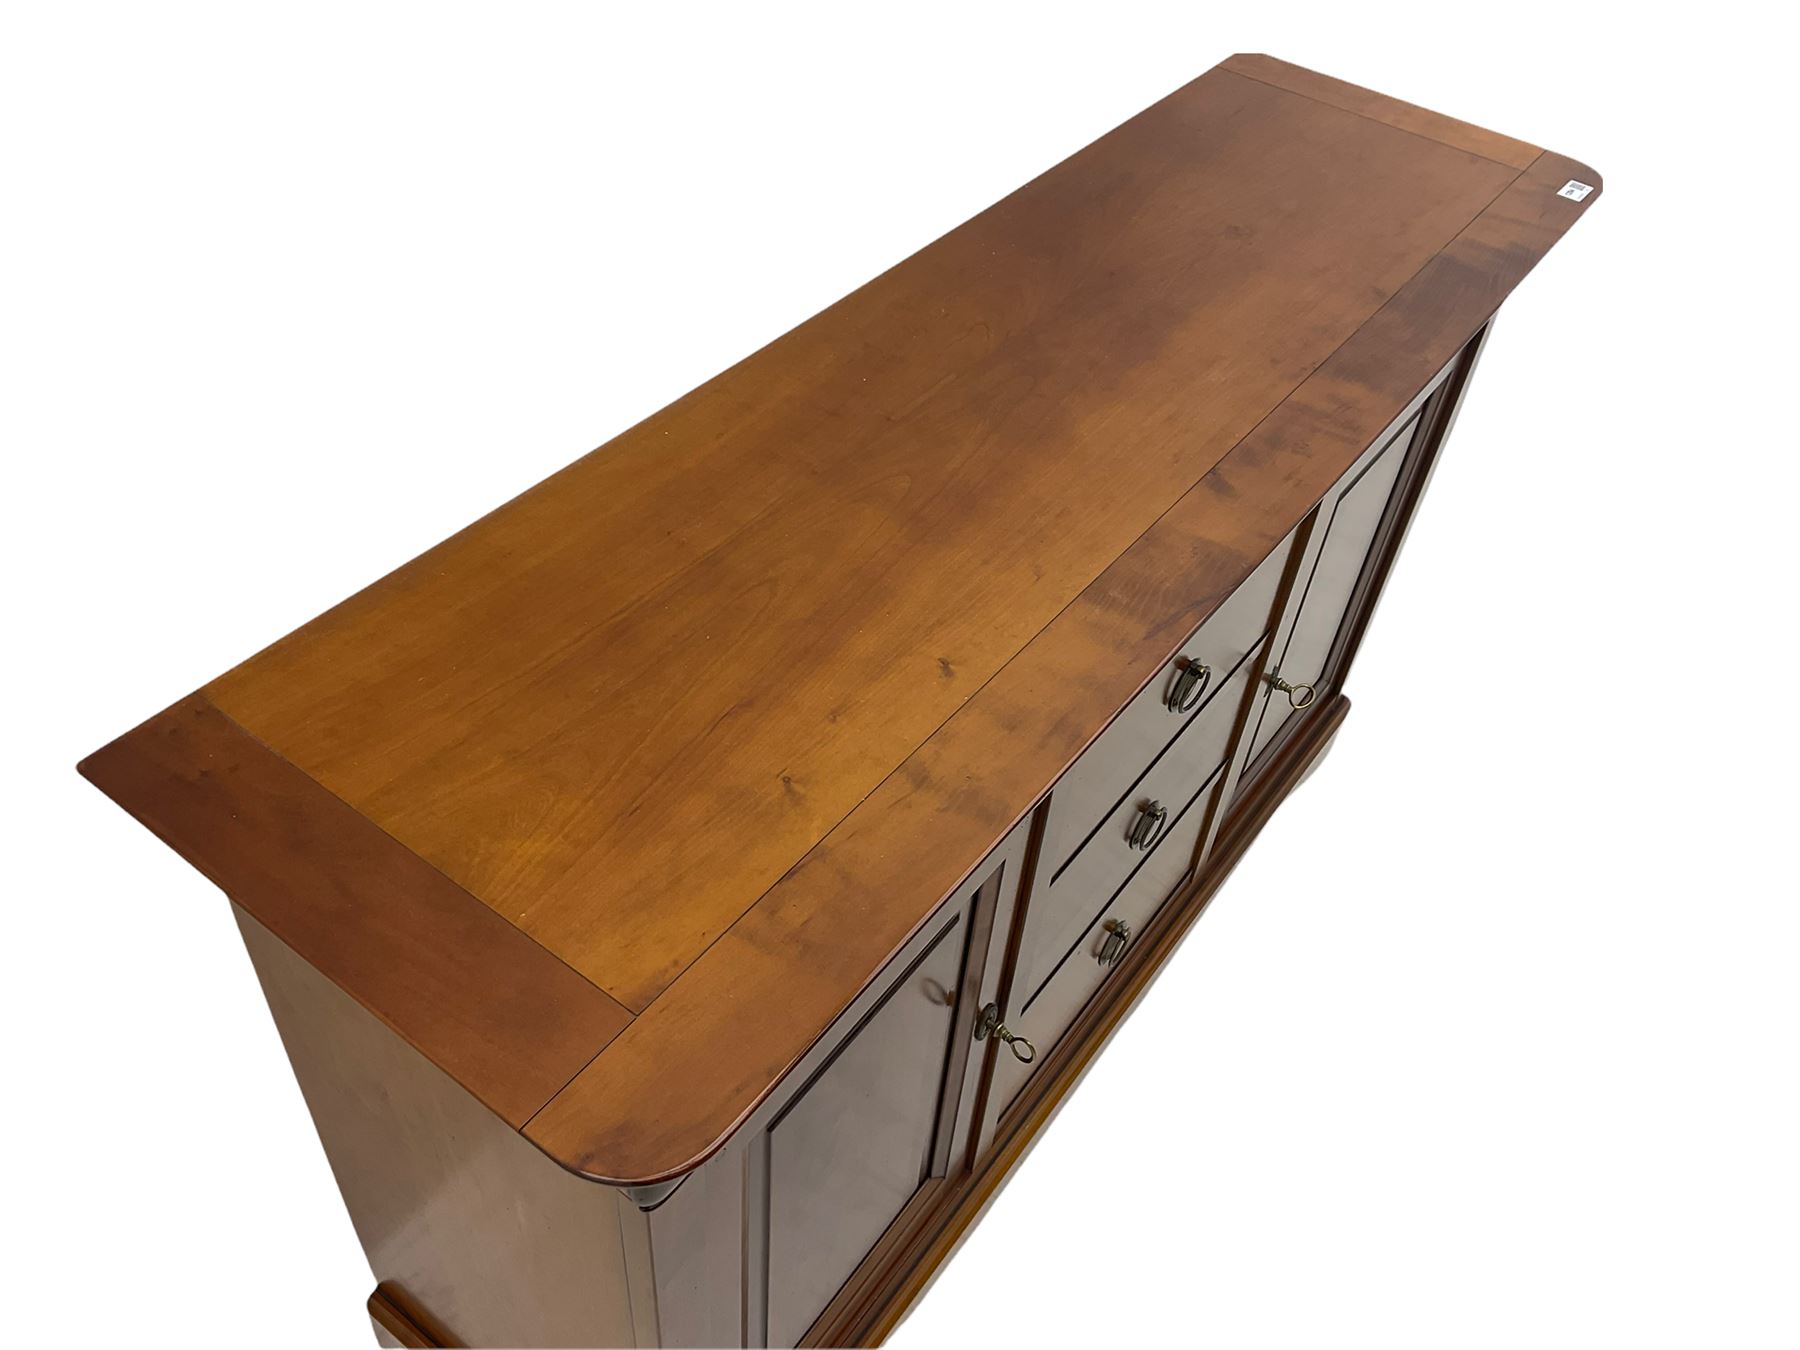 Grange Furniture cherry wood sideboard - Image 8 of 9